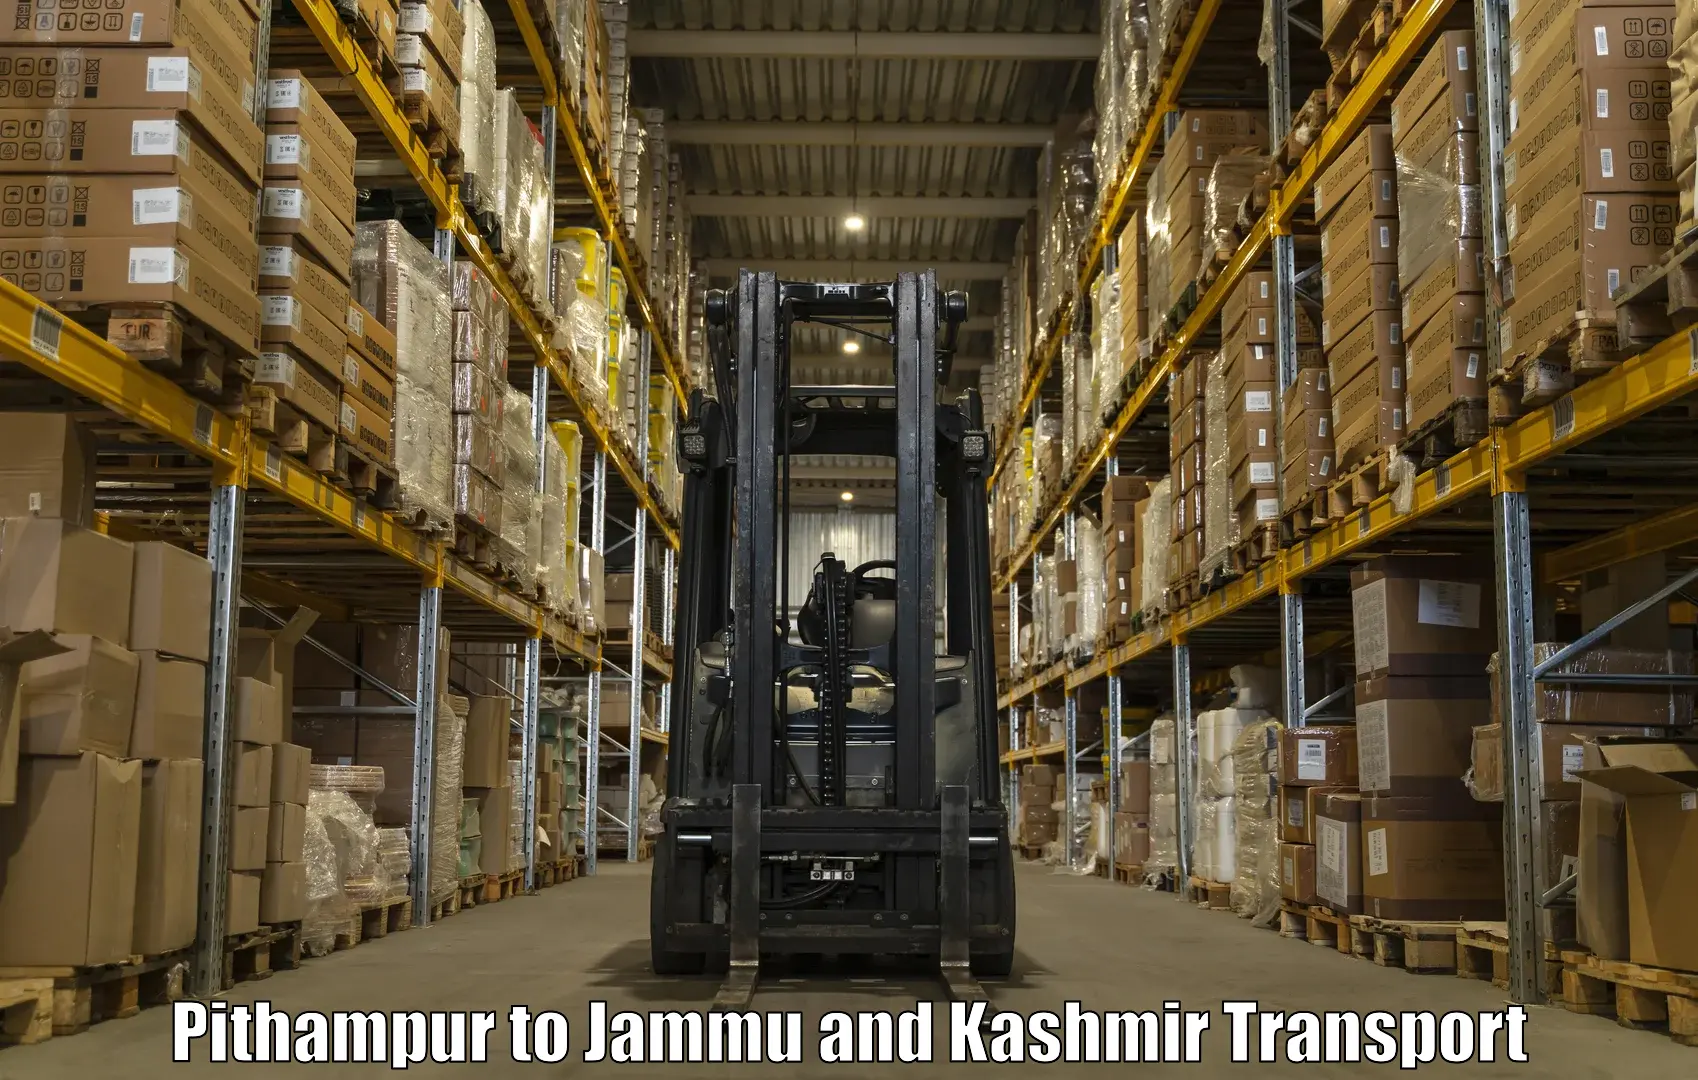 Transport in sharing Pithampur to Srinagar Kashmir